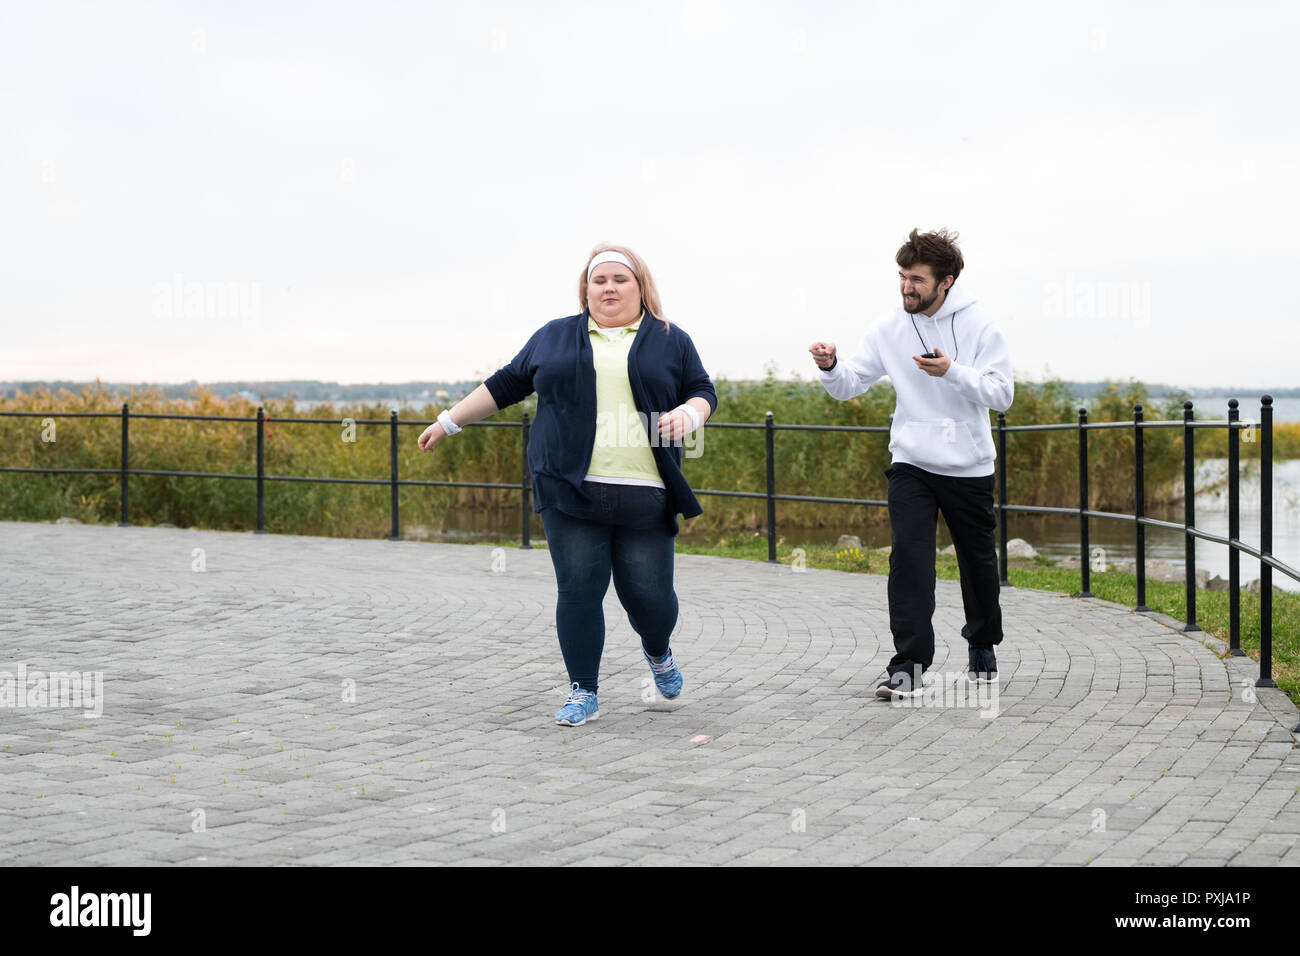 Overweight Woman Running Outdoors Stock Photo